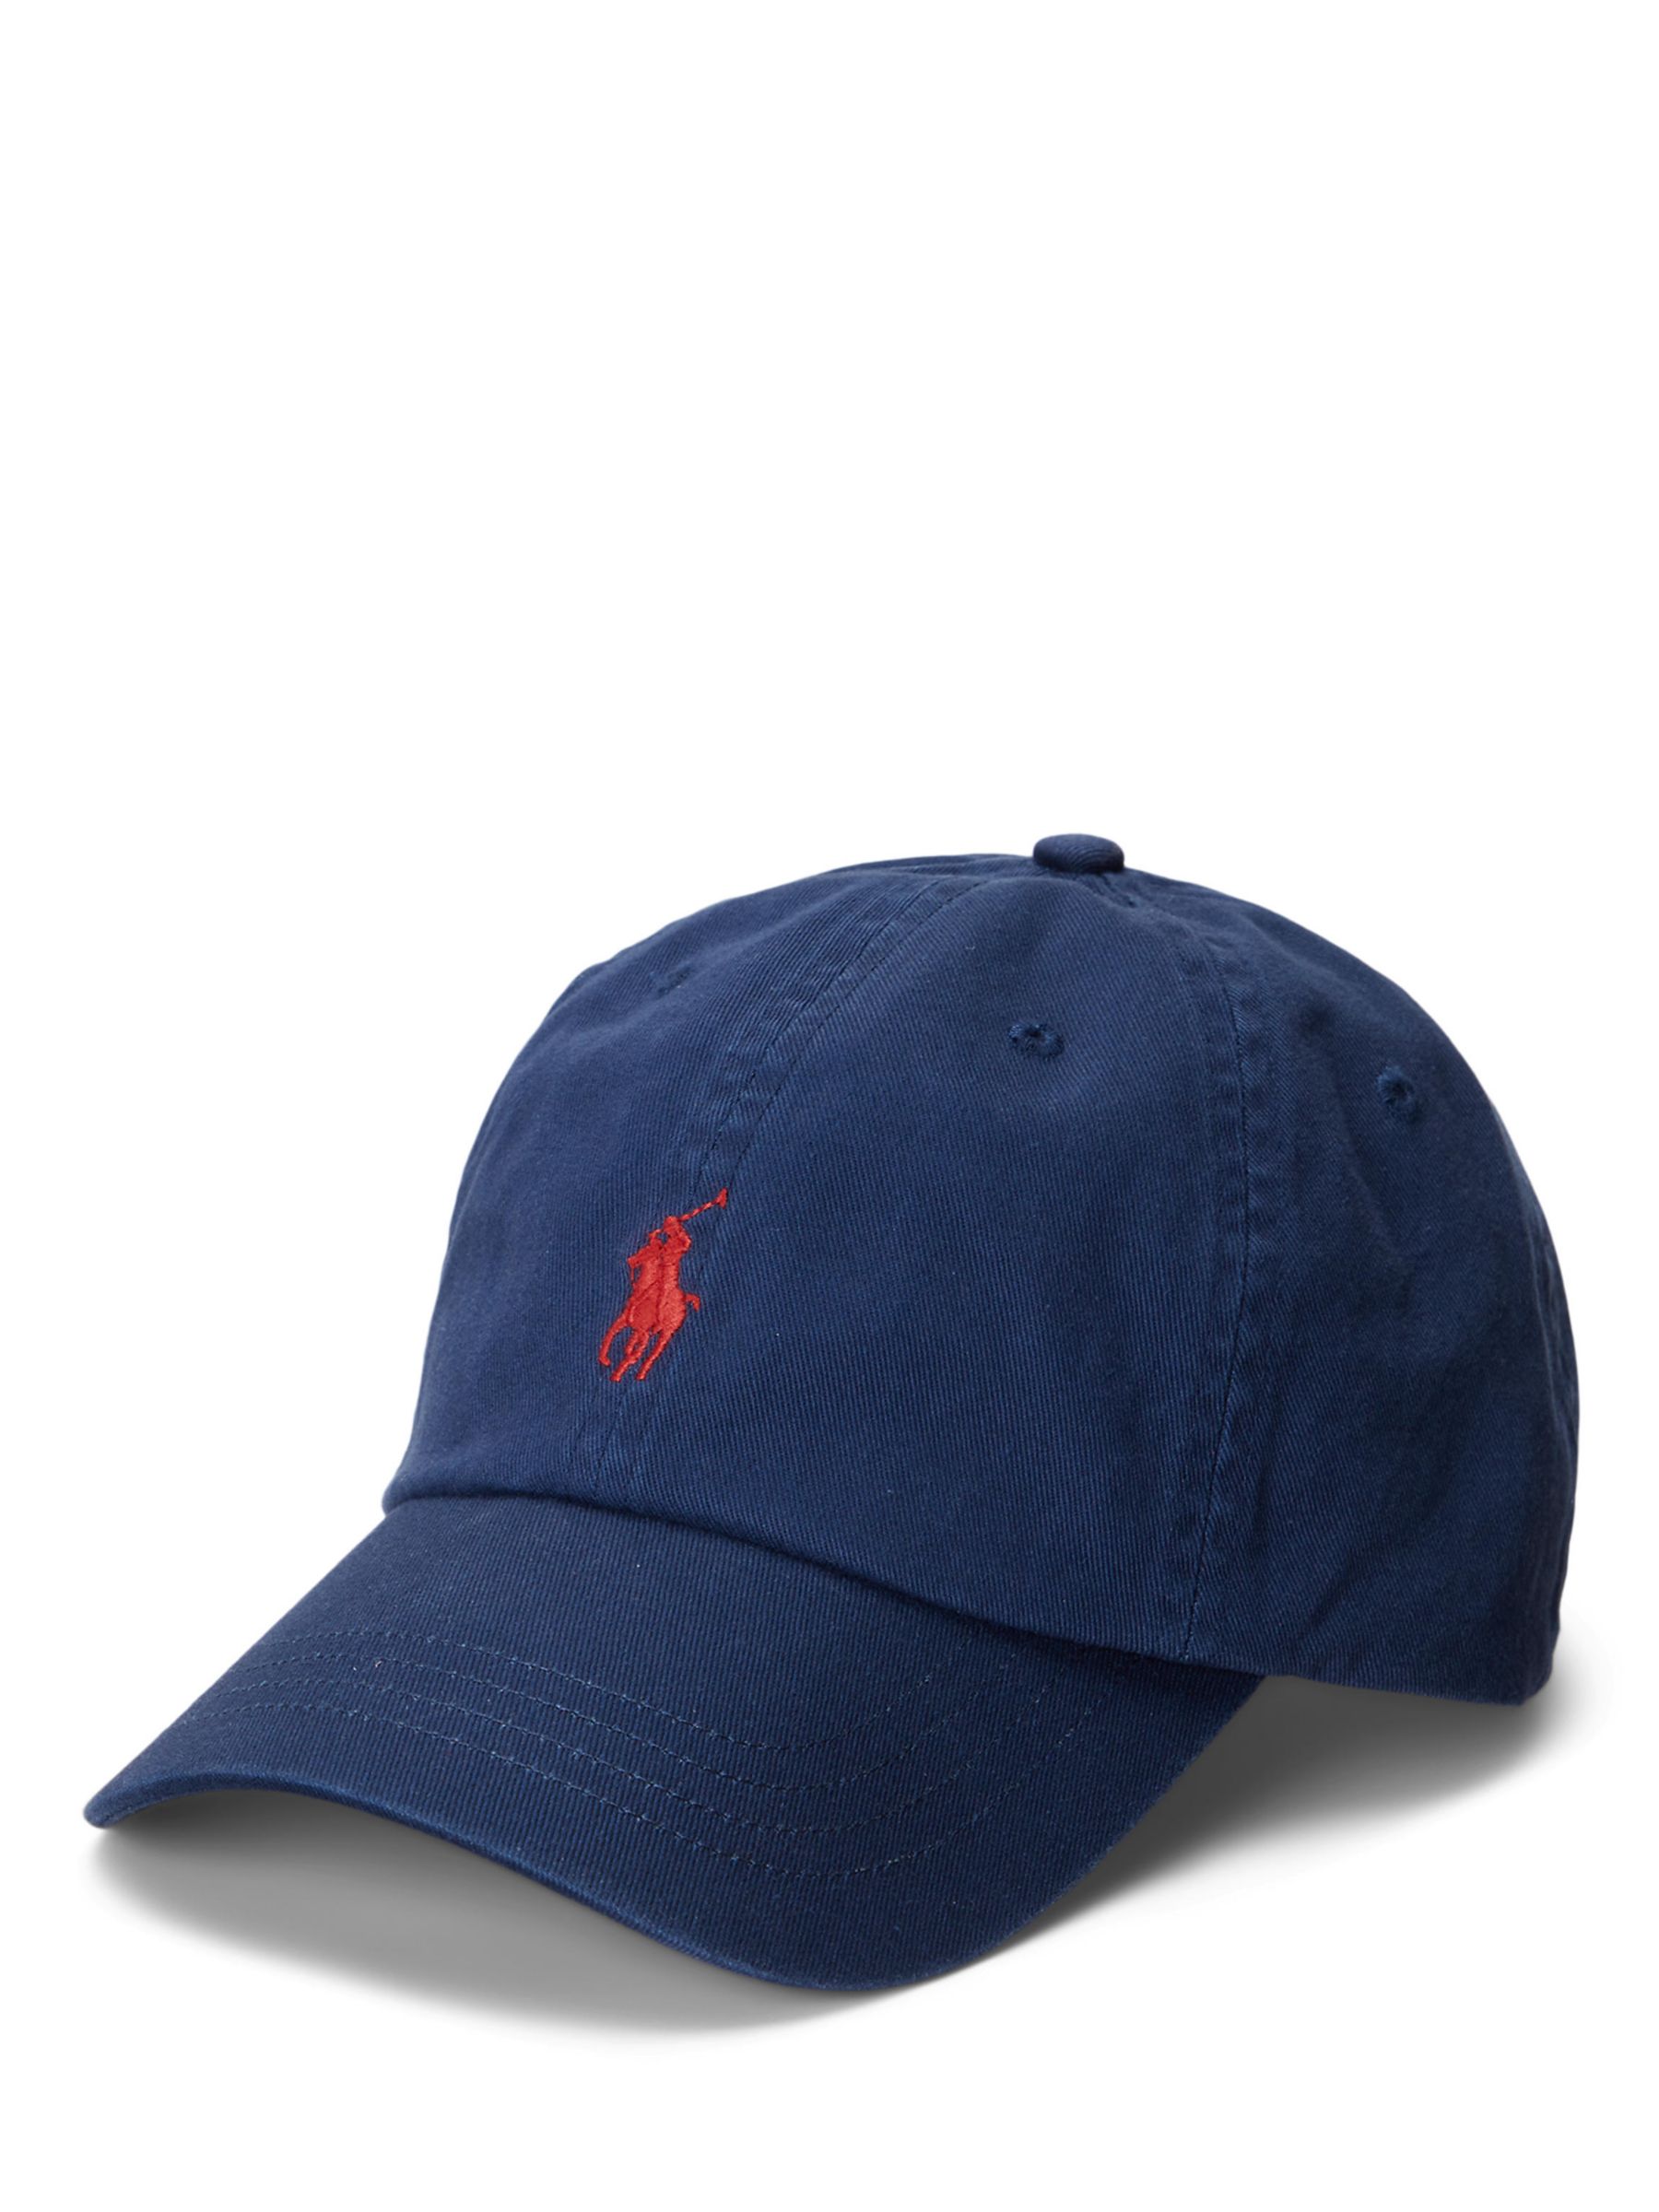 Polo Ralph Lauren Signature Pony Baseball Cap, Navy/Red